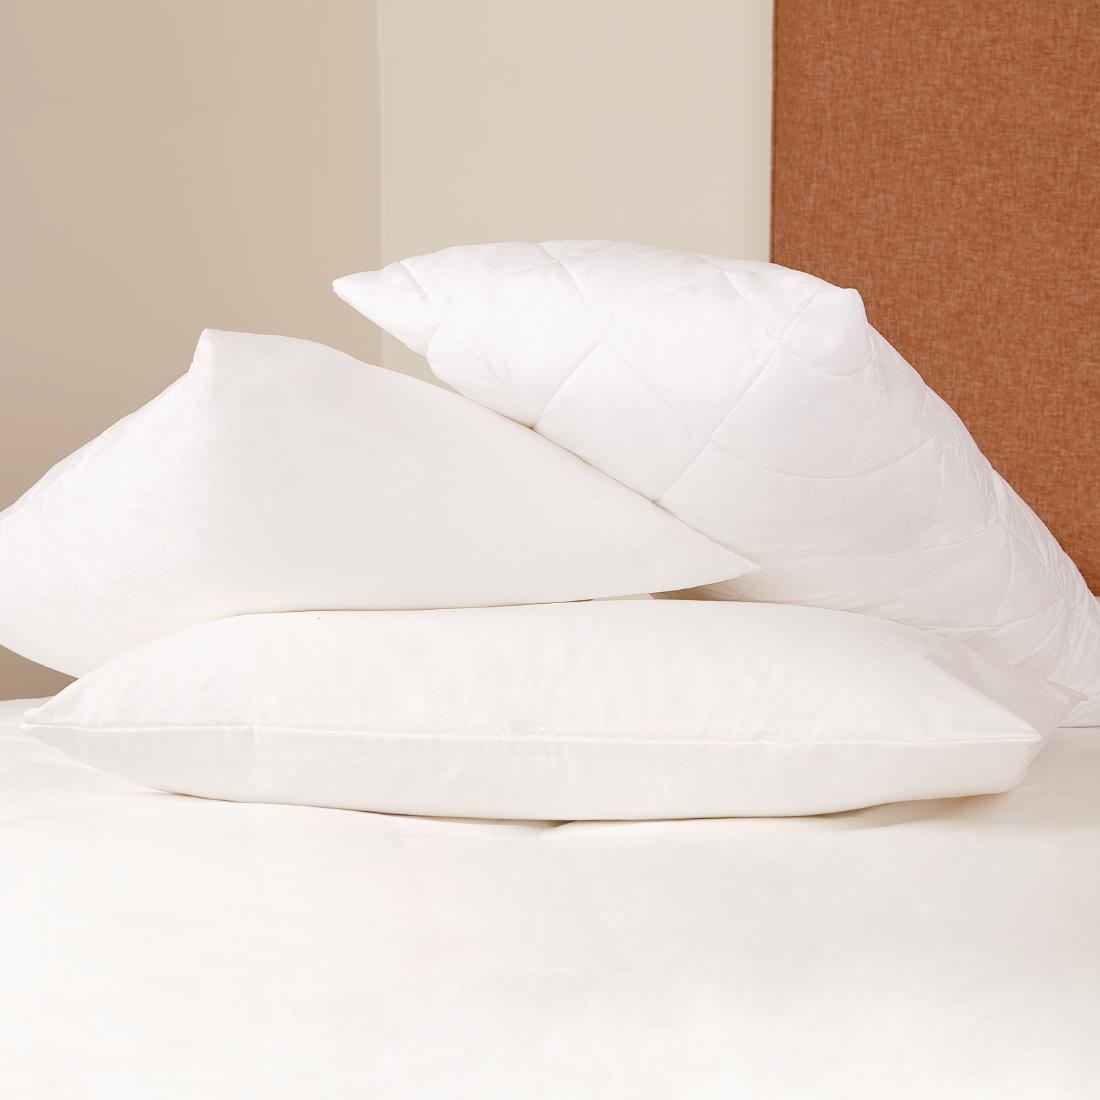 Mitre Comfort Quiltop Pillow Protector - GT833  - 1